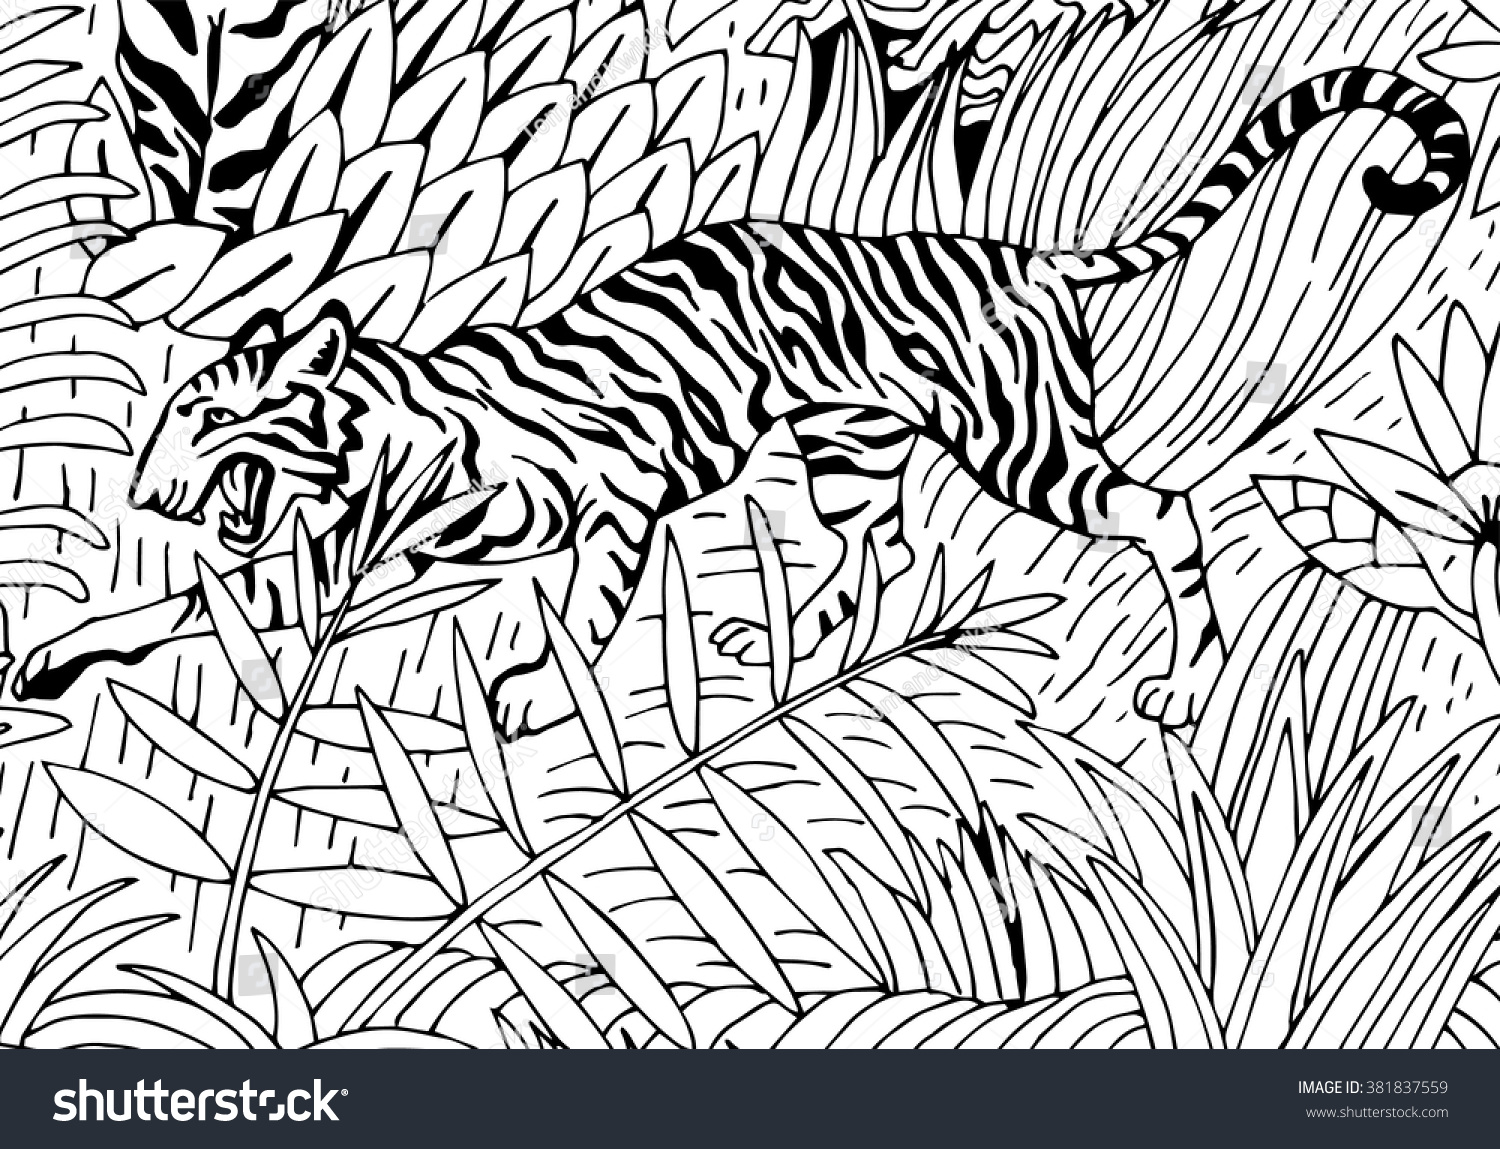 Tiger Jungle Coloring Page Stock Vektorgrafik Lizenzfrei ...